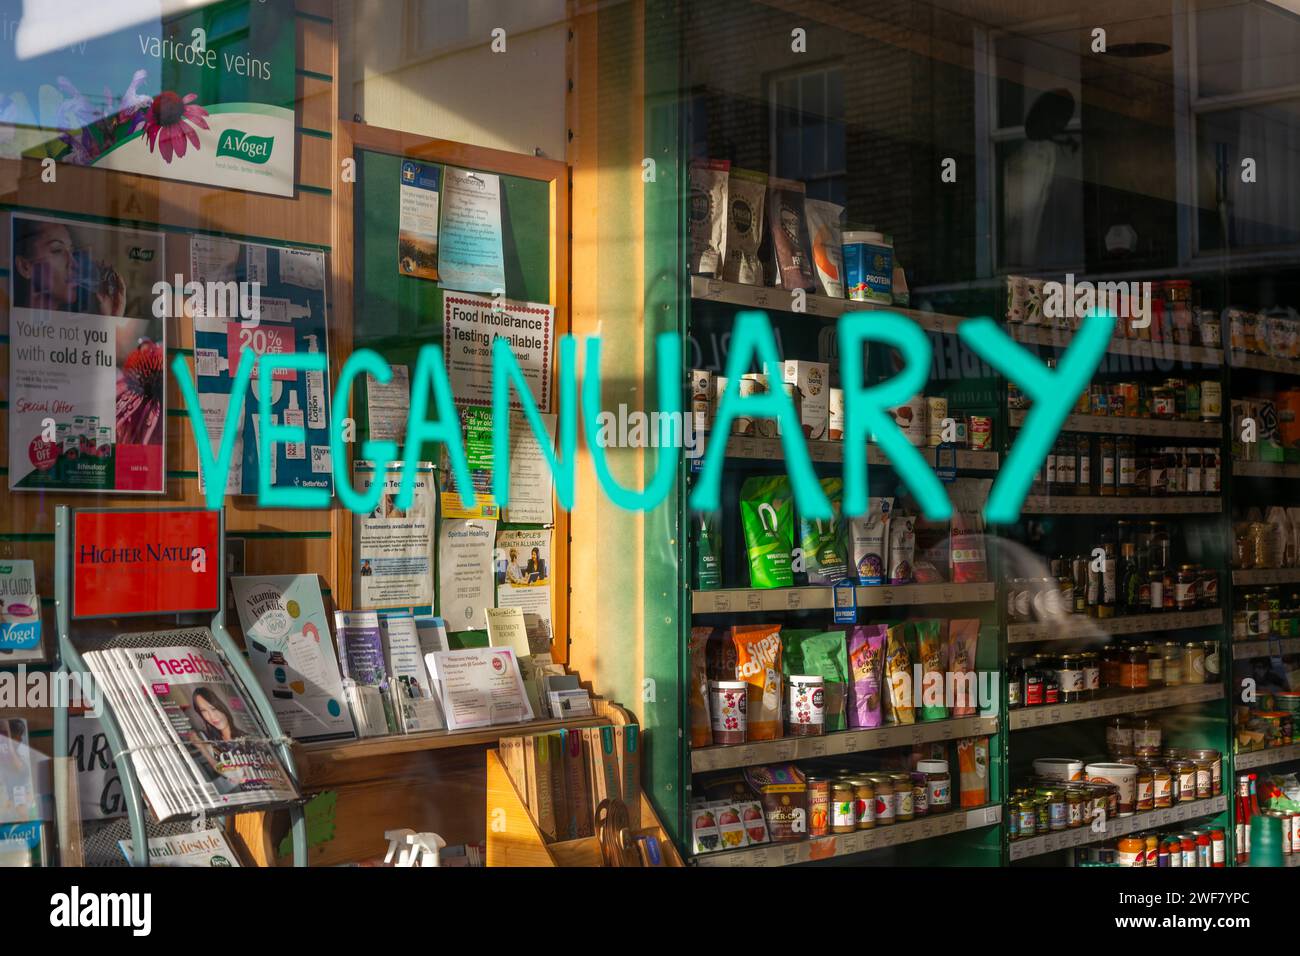 Veganuary sign in shop window whole food shop, Naturalife  Taunton, Somerset, England, UK Stock Photo